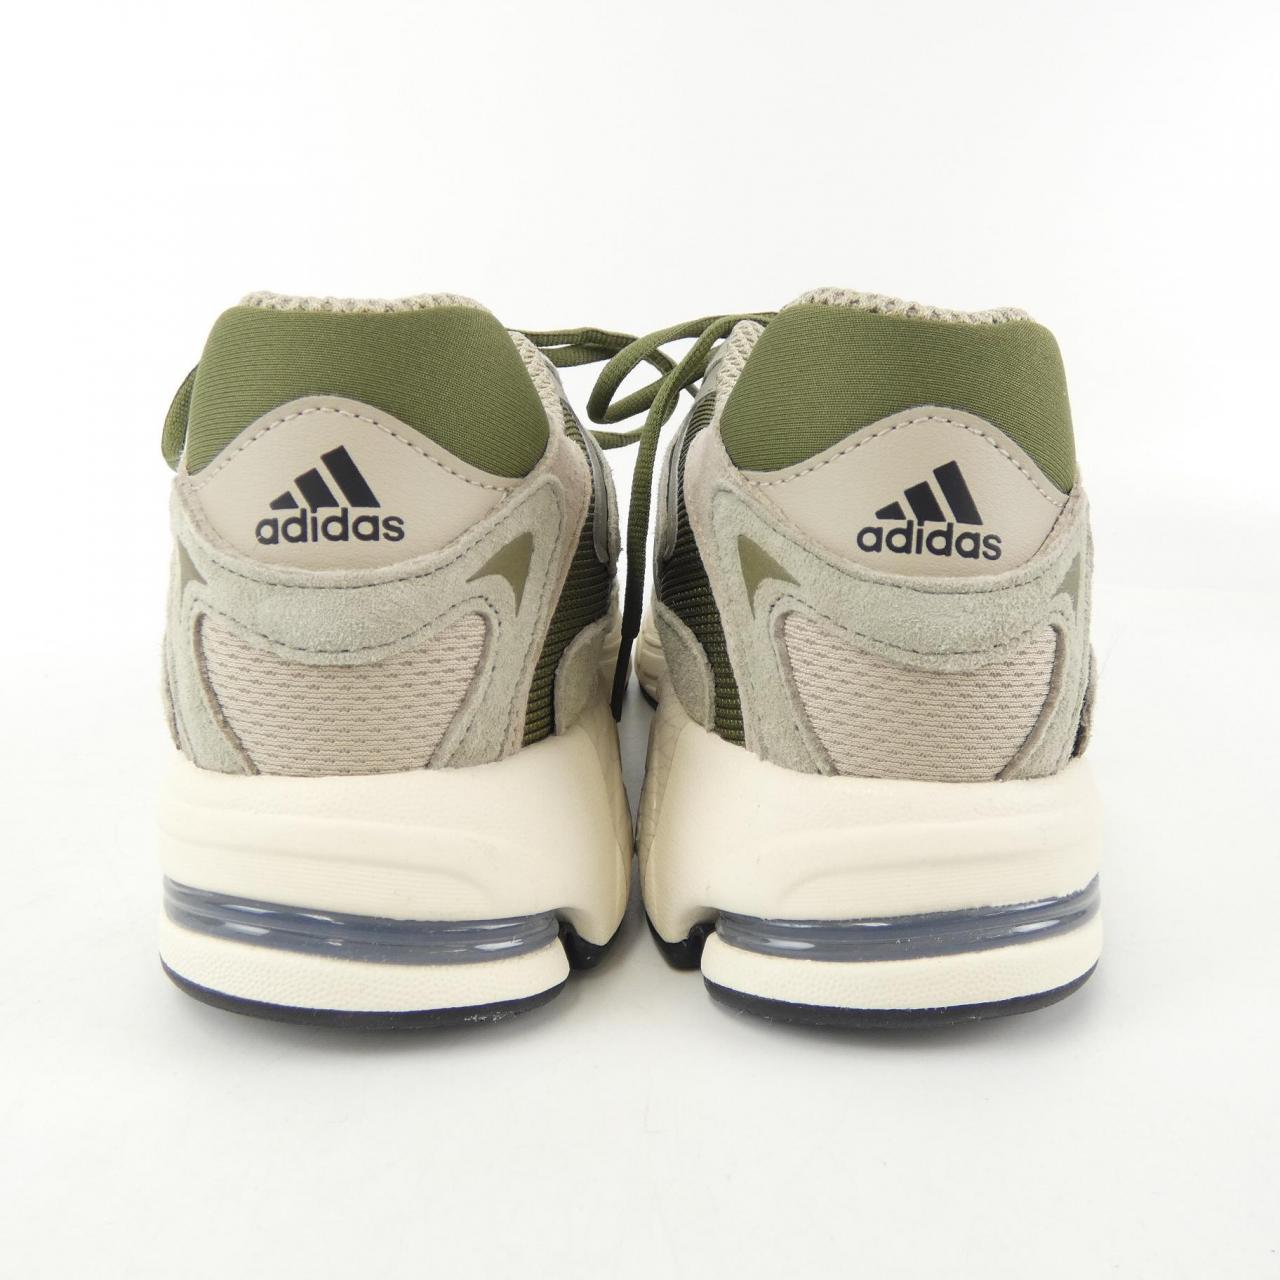 Adidas ADIDAS sneakers